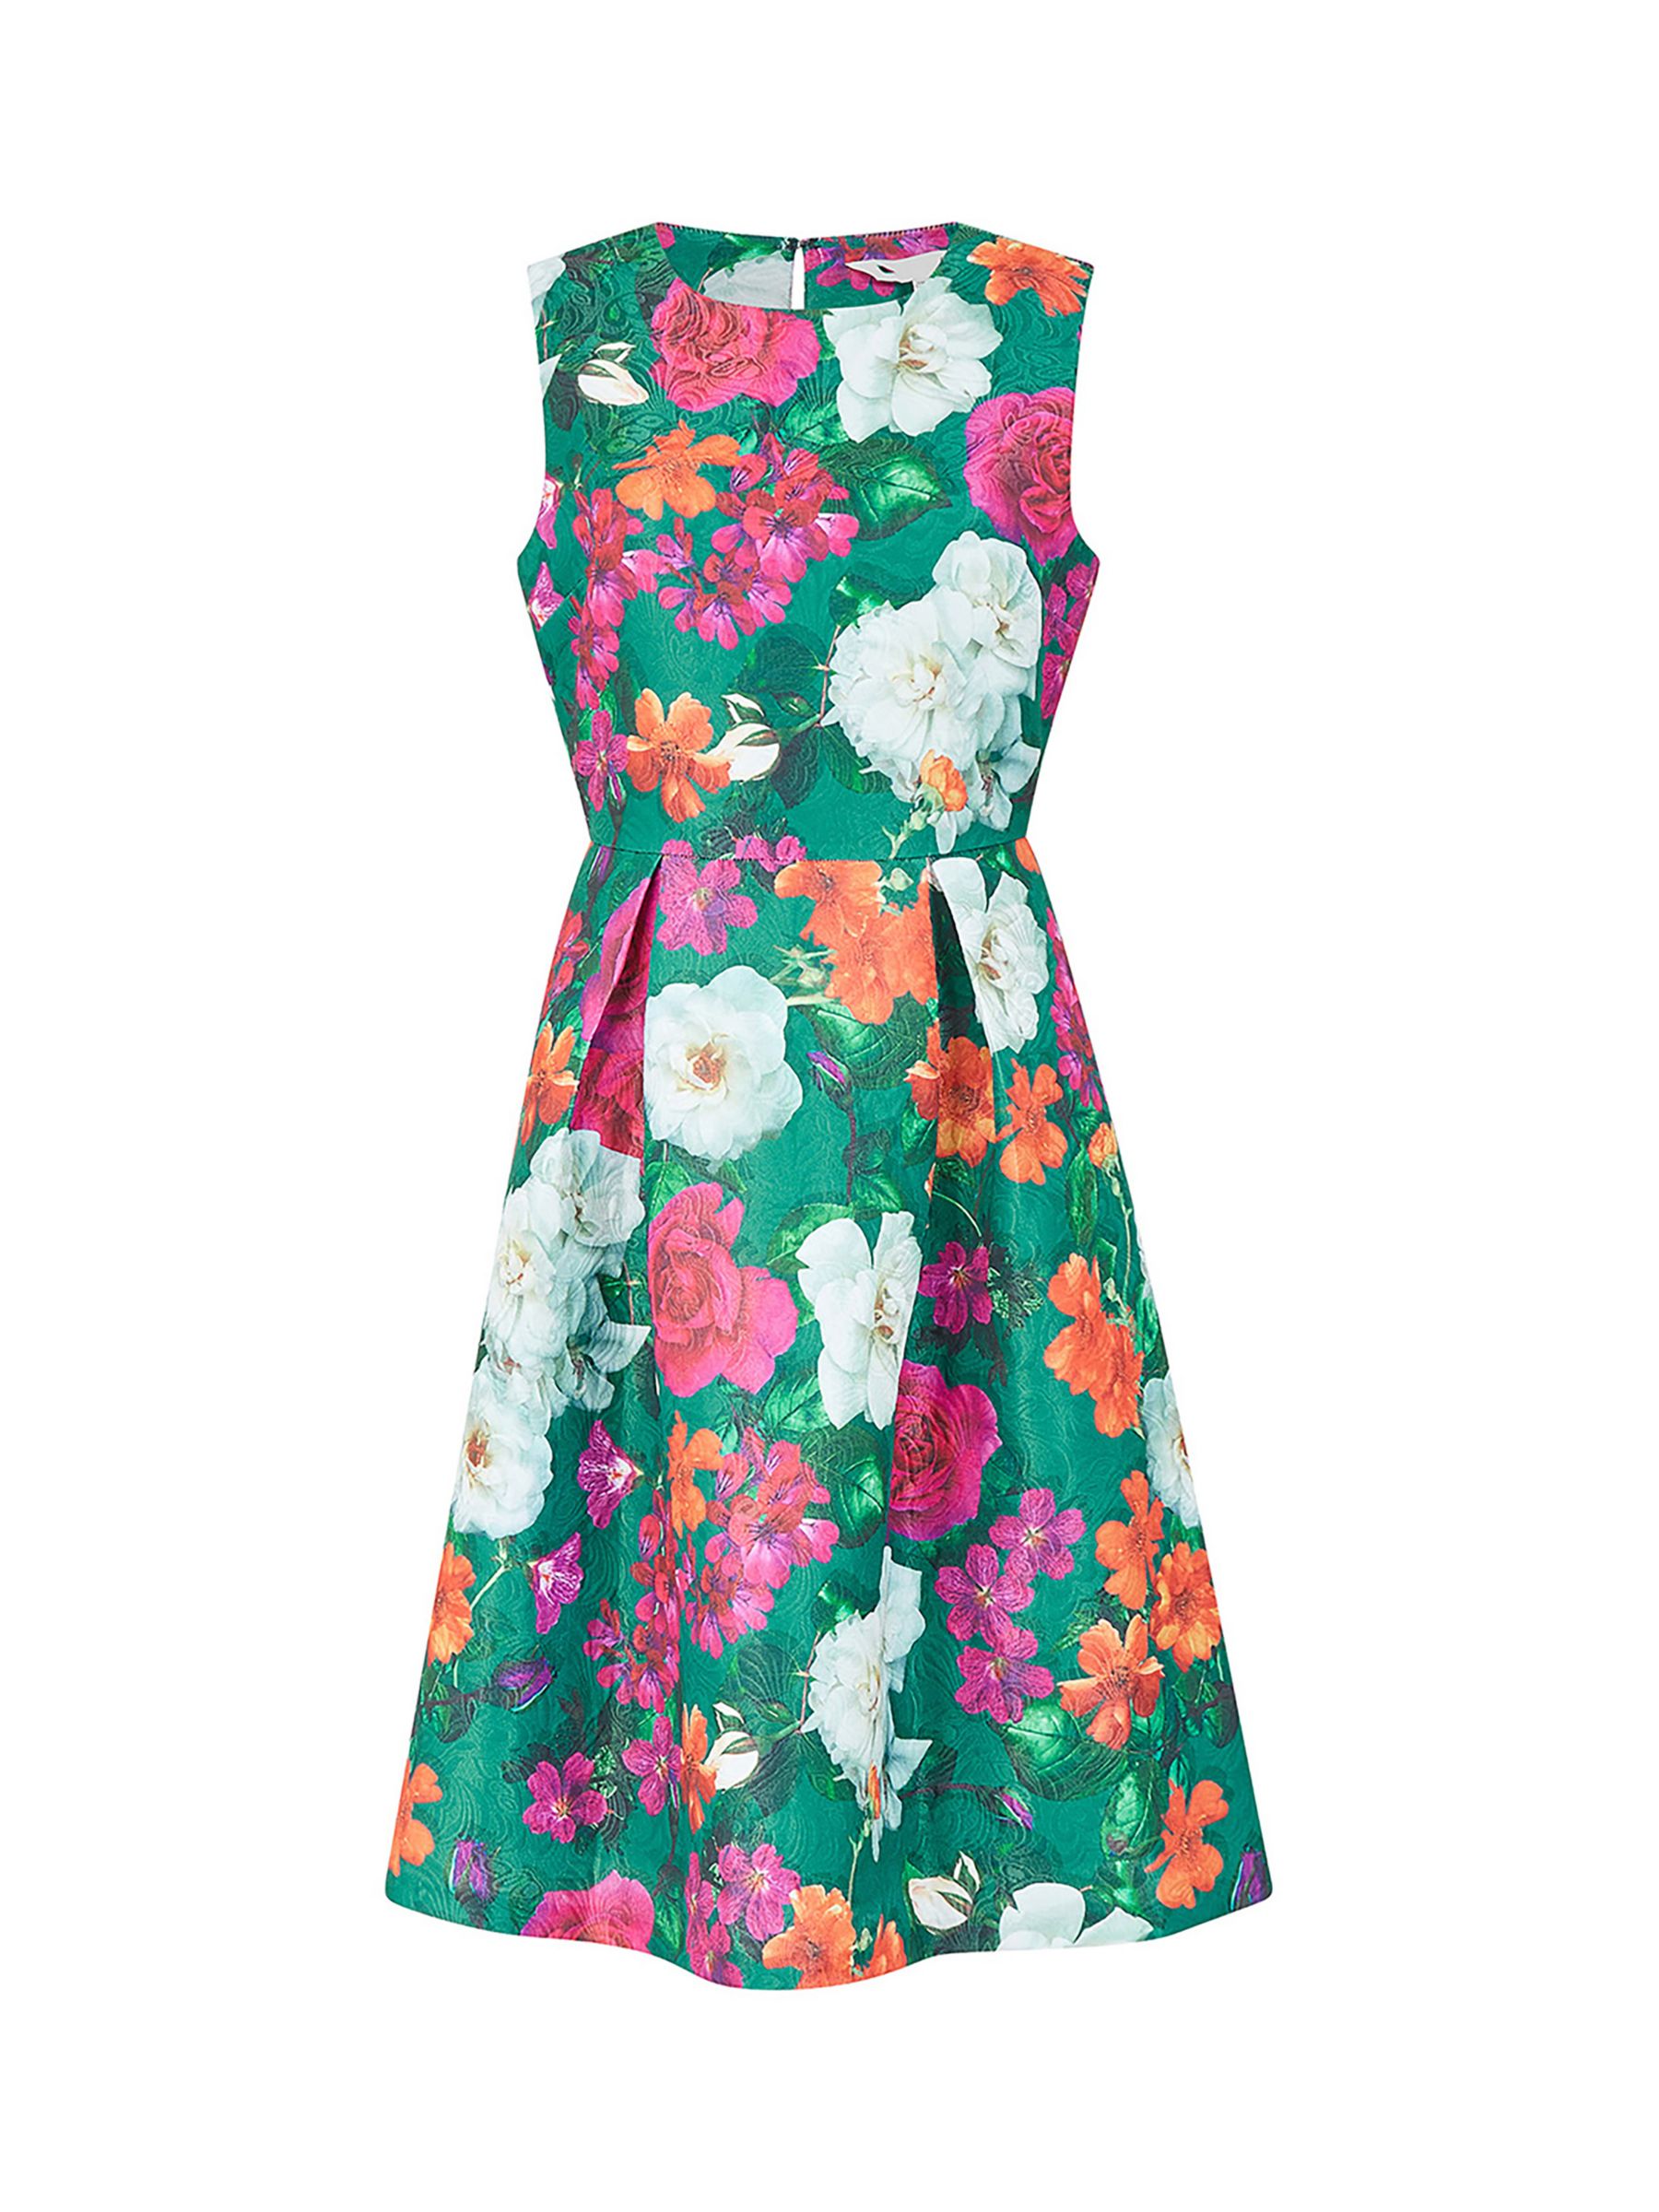 Yumi Floral Flared Jacquard Dress, Green/Multi, 8